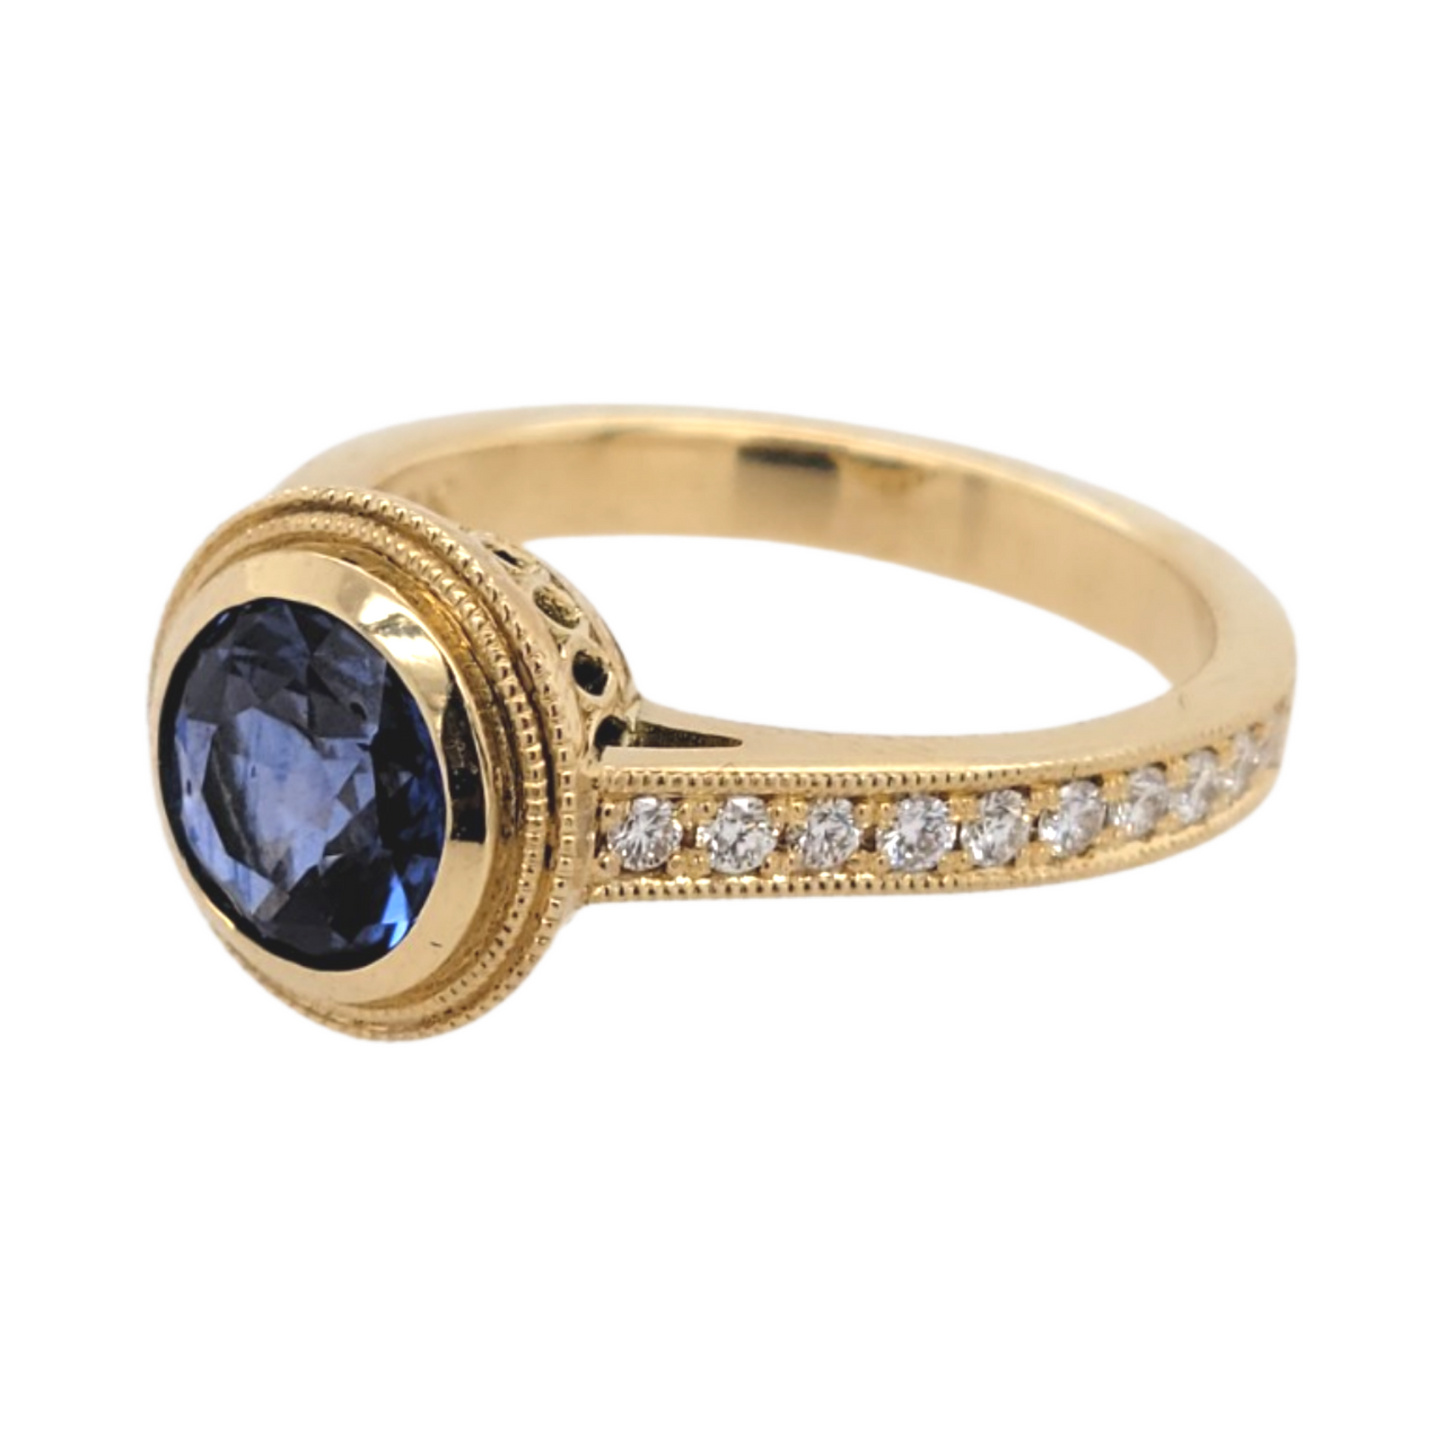 Round Blue Sapphire Ring